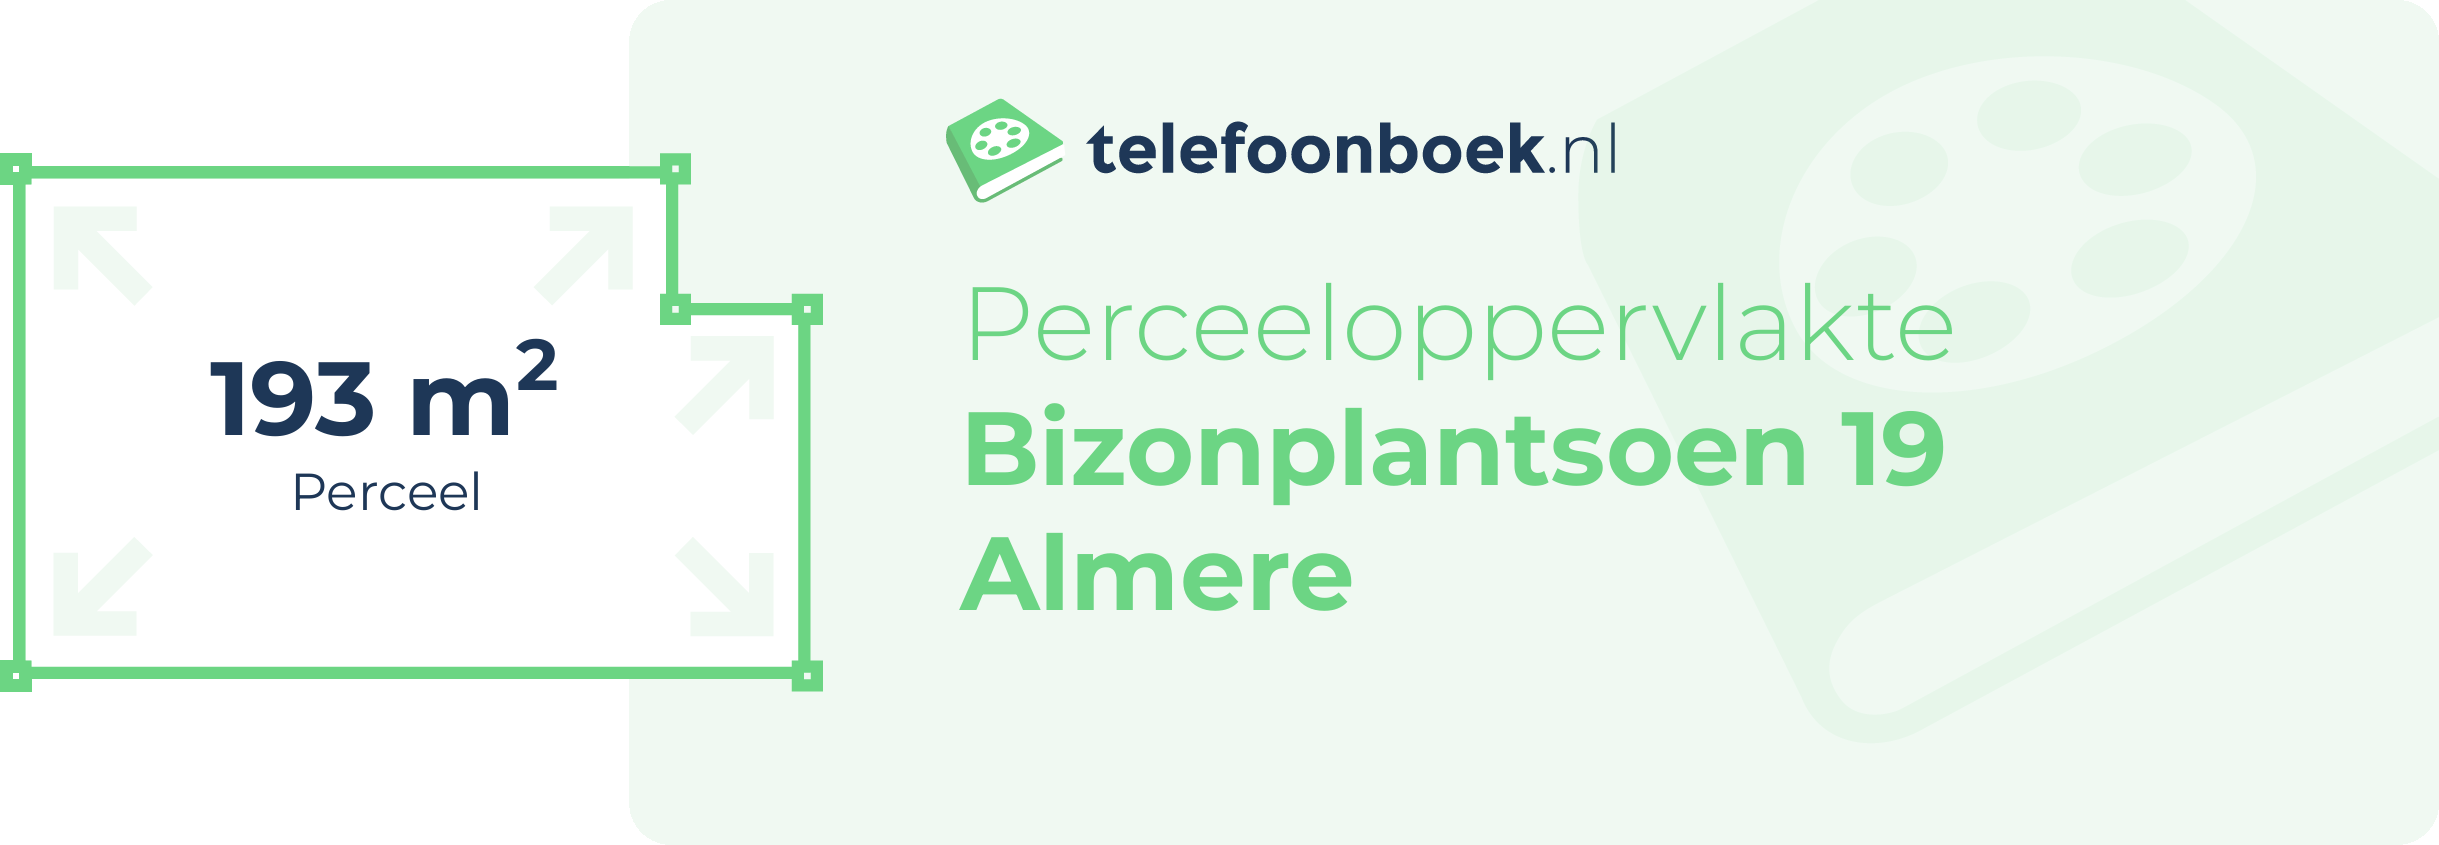 Perceeloppervlakte Bizonplantsoen 19 Almere